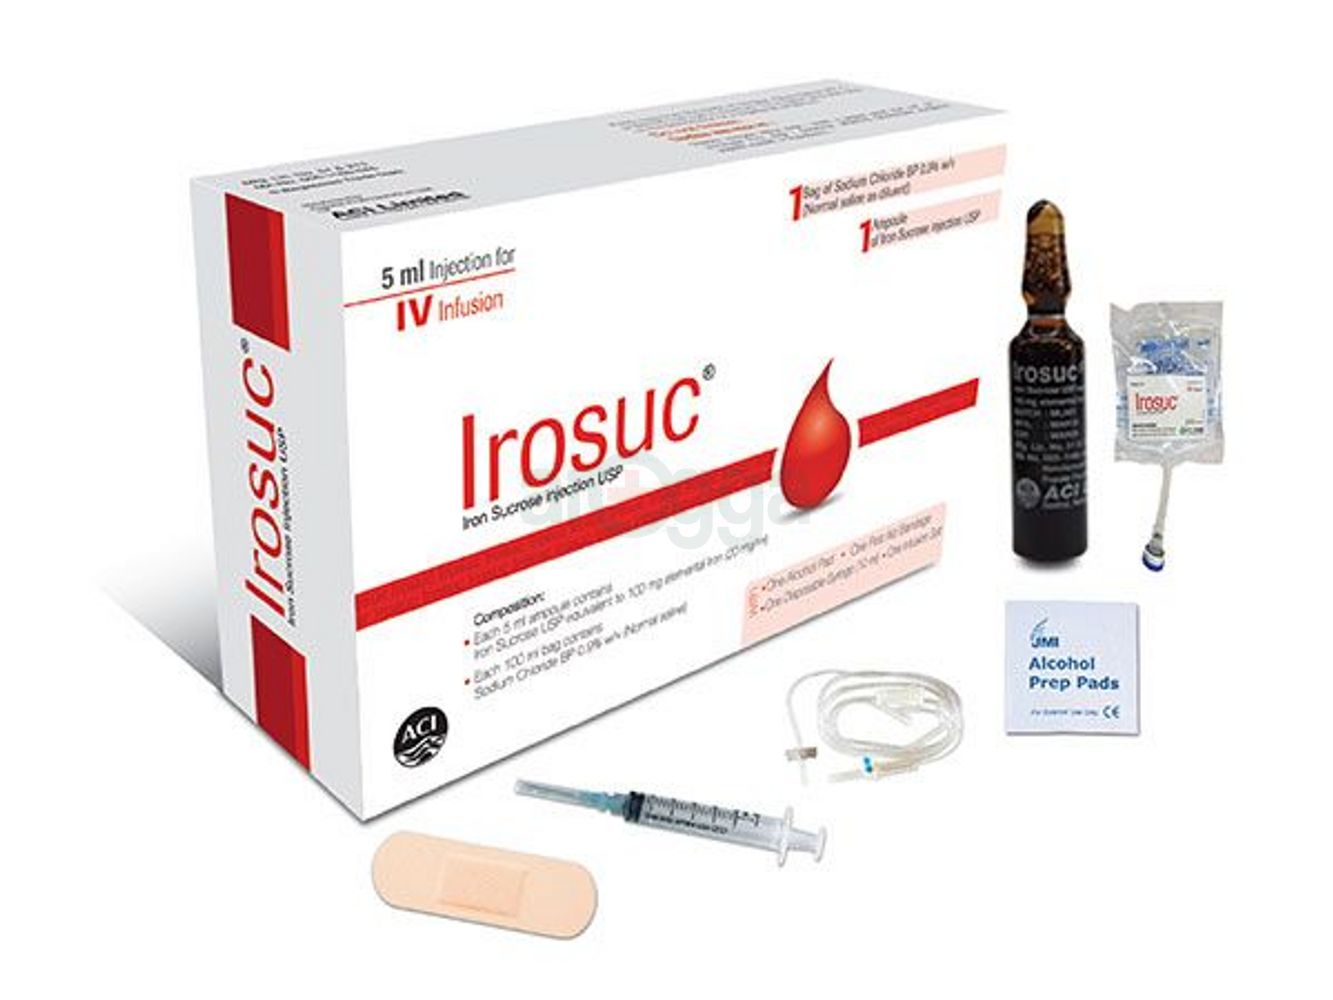 Irosuc Injection